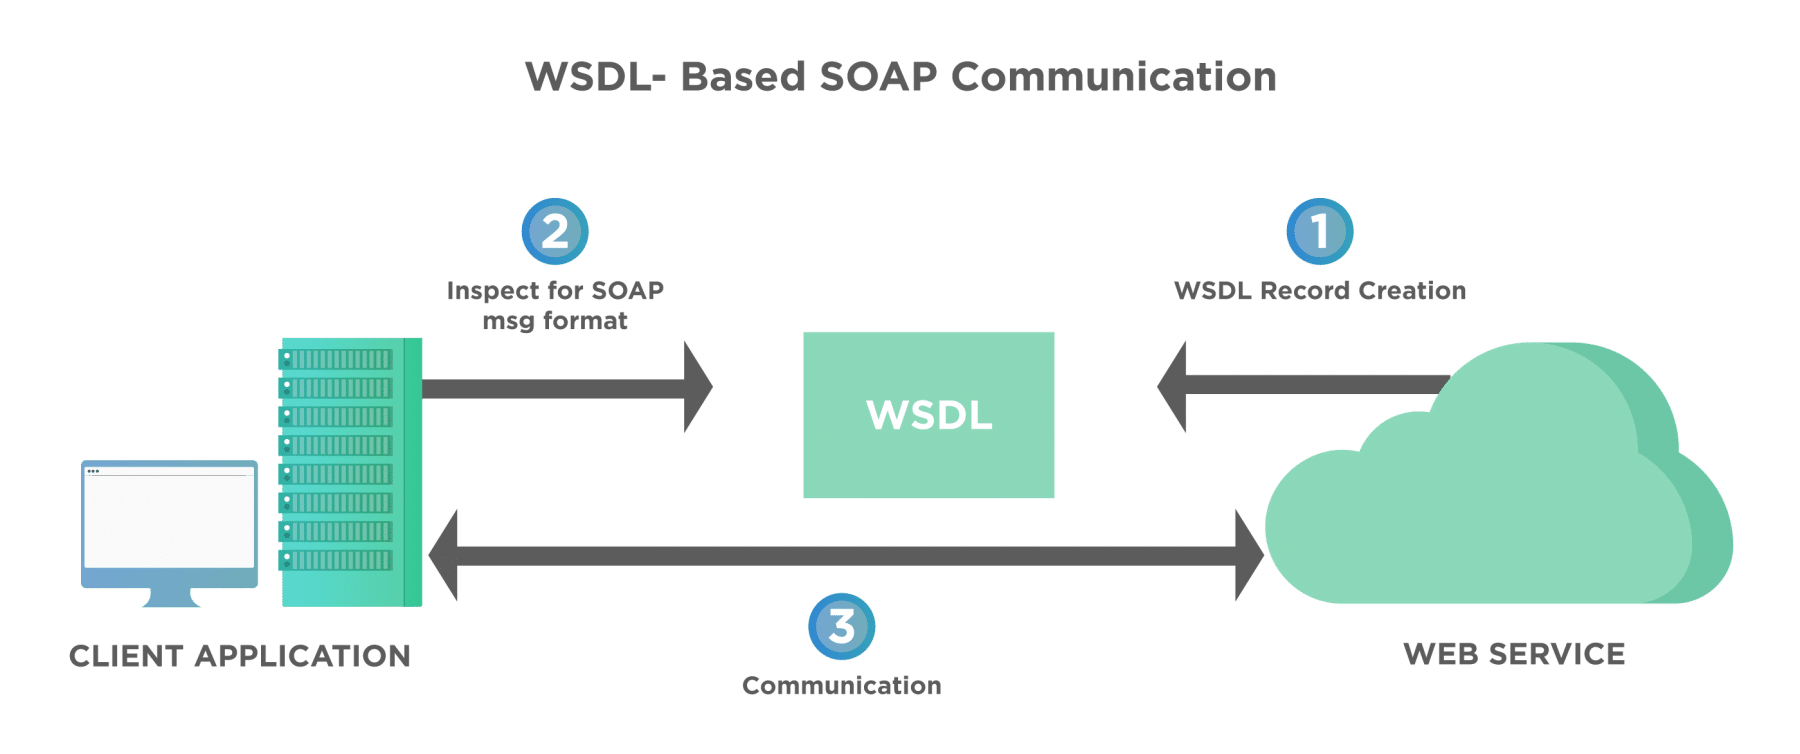 WSDL communication